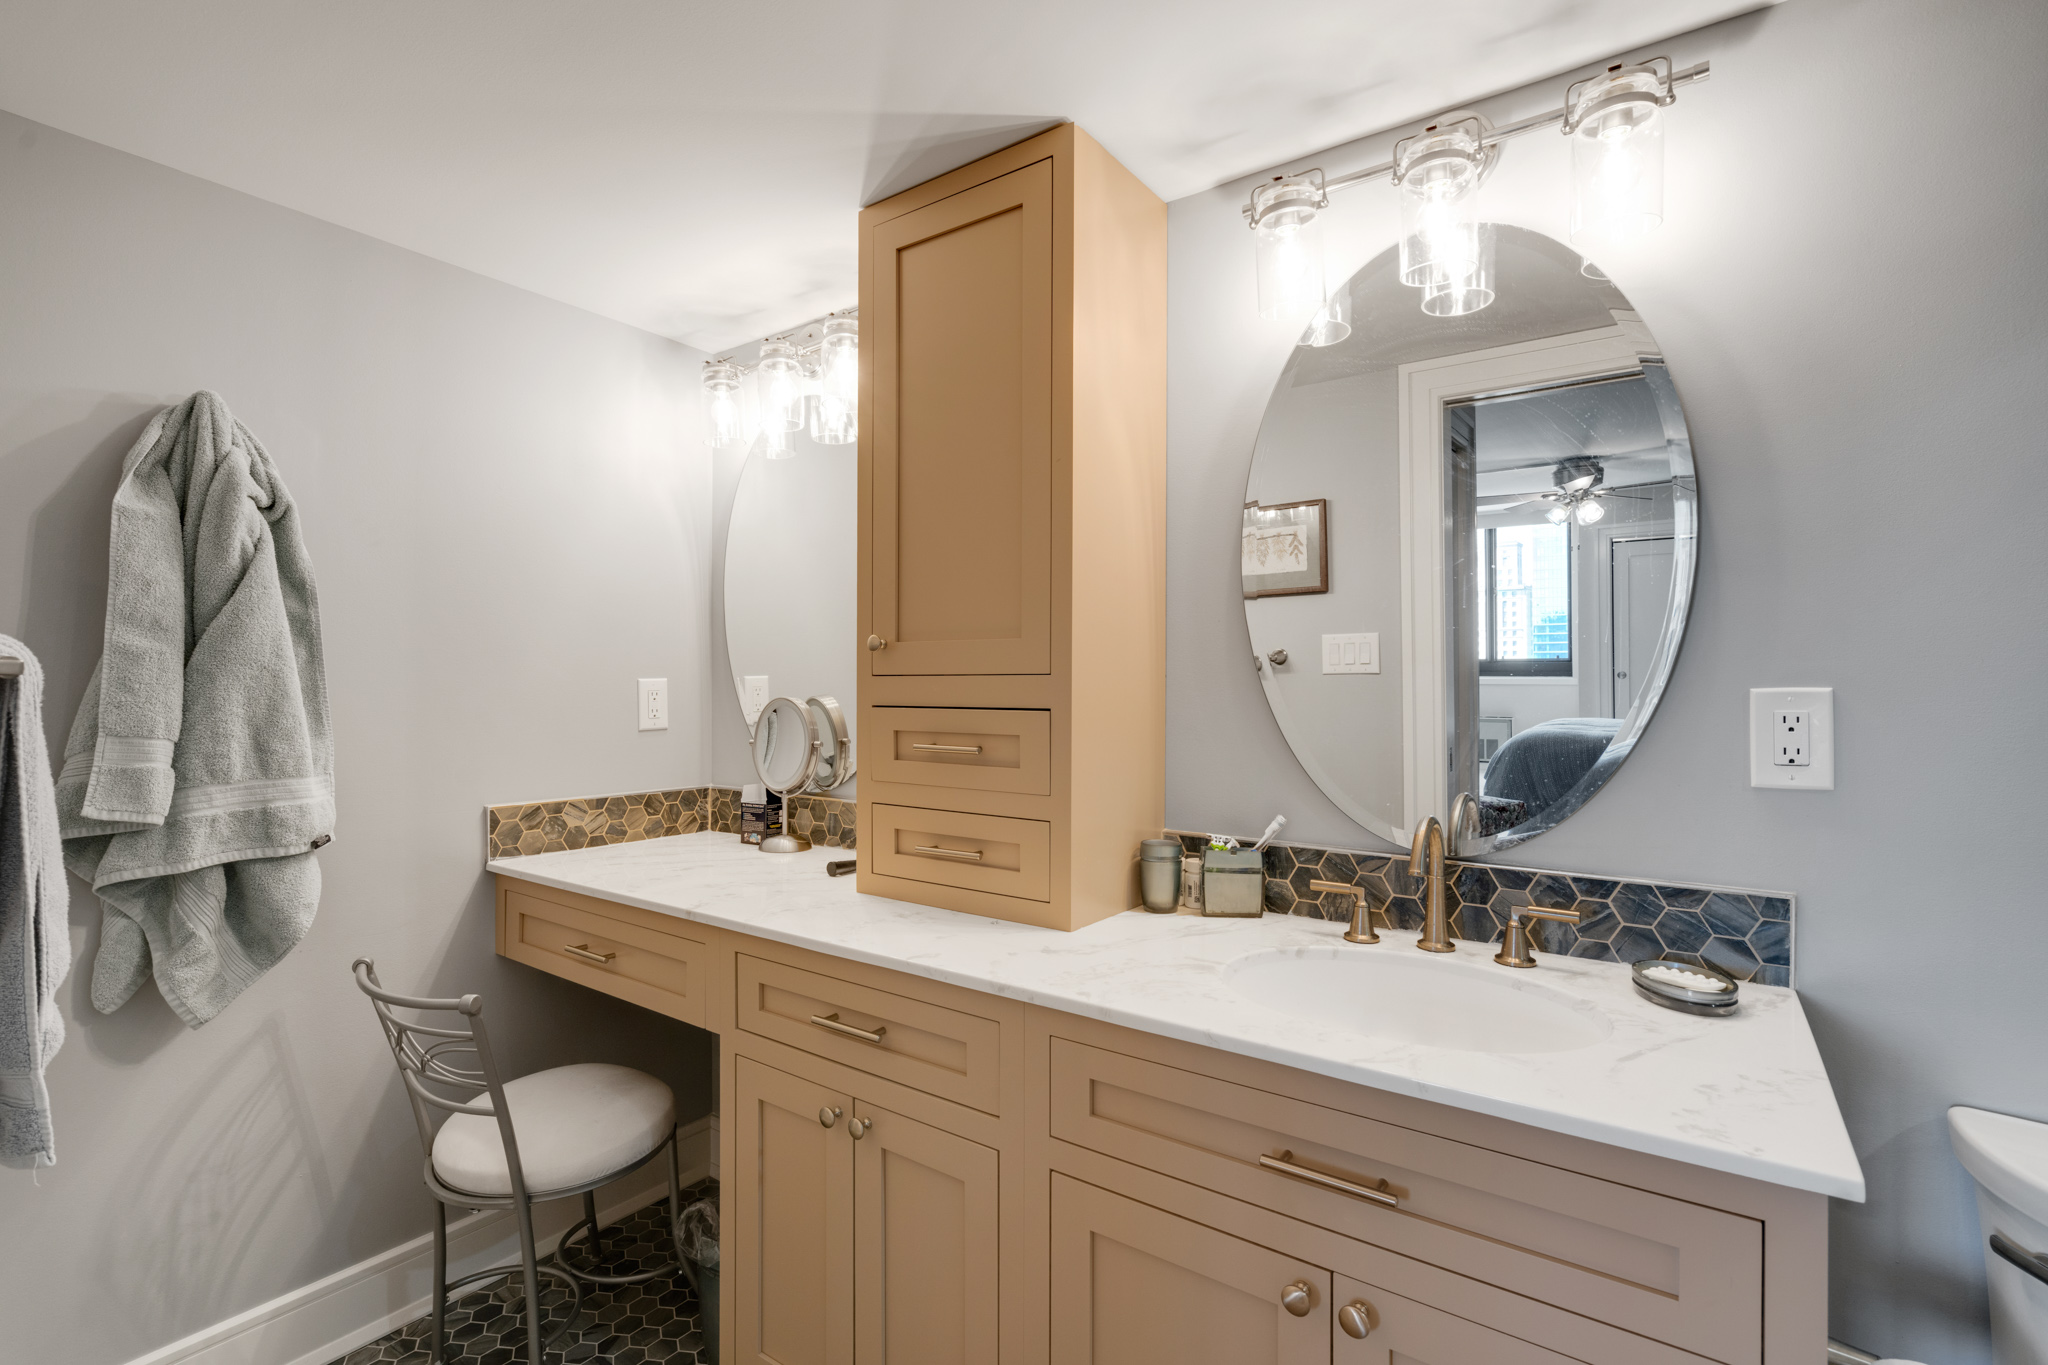 Bathroom. Update cabinet hardware. Double mirrors. Double vanity. 